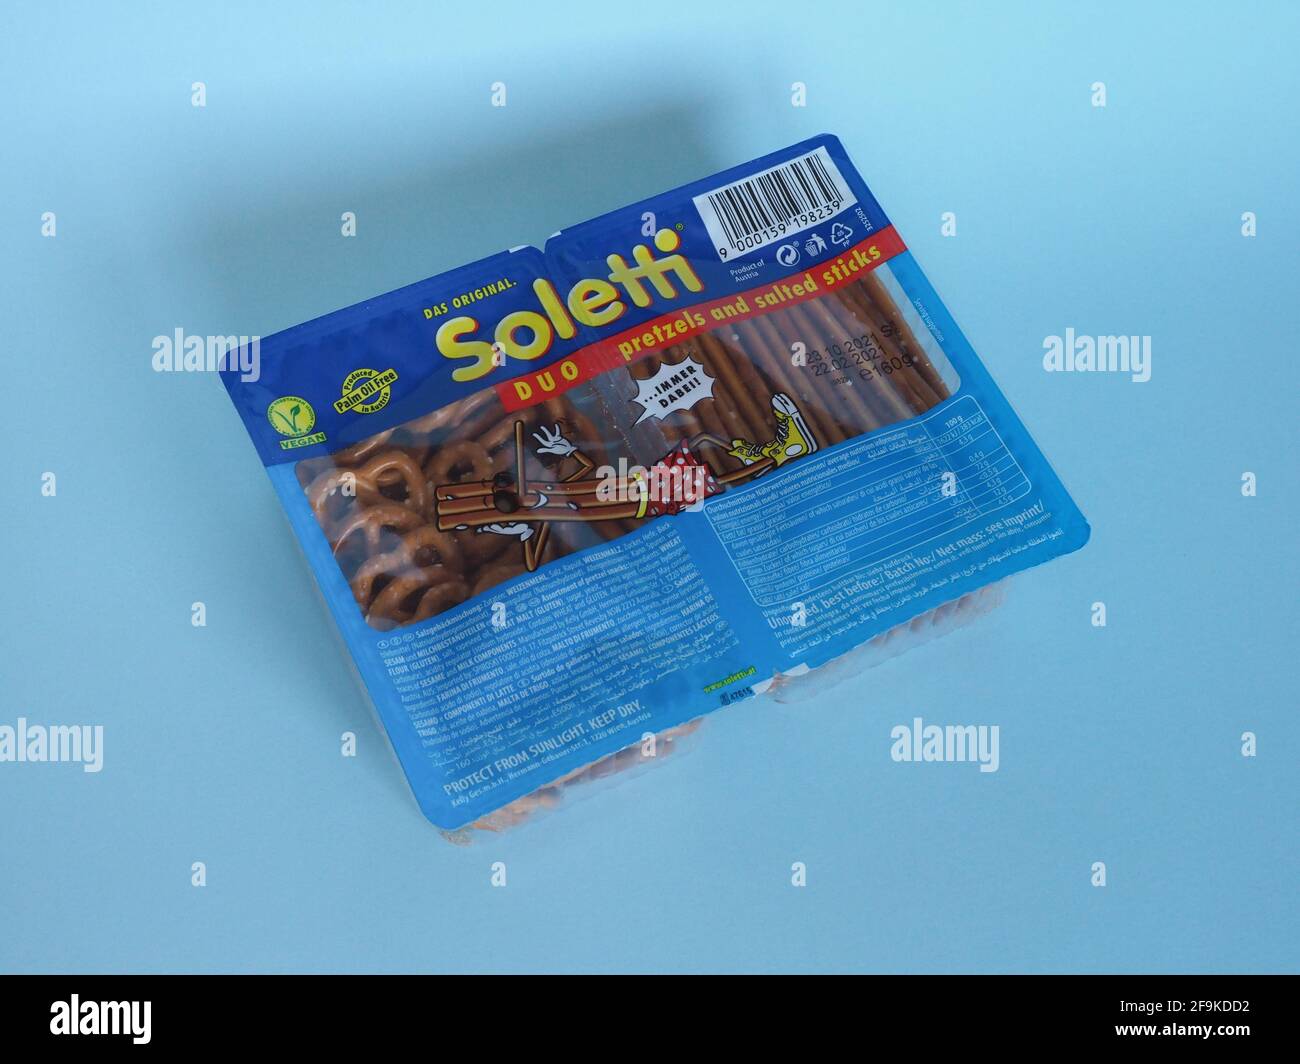 FELDBACH, AUSTRIA - CIRCA APRIL 2021: Packet of Soletti pretzels and salted sticks Stock Photo